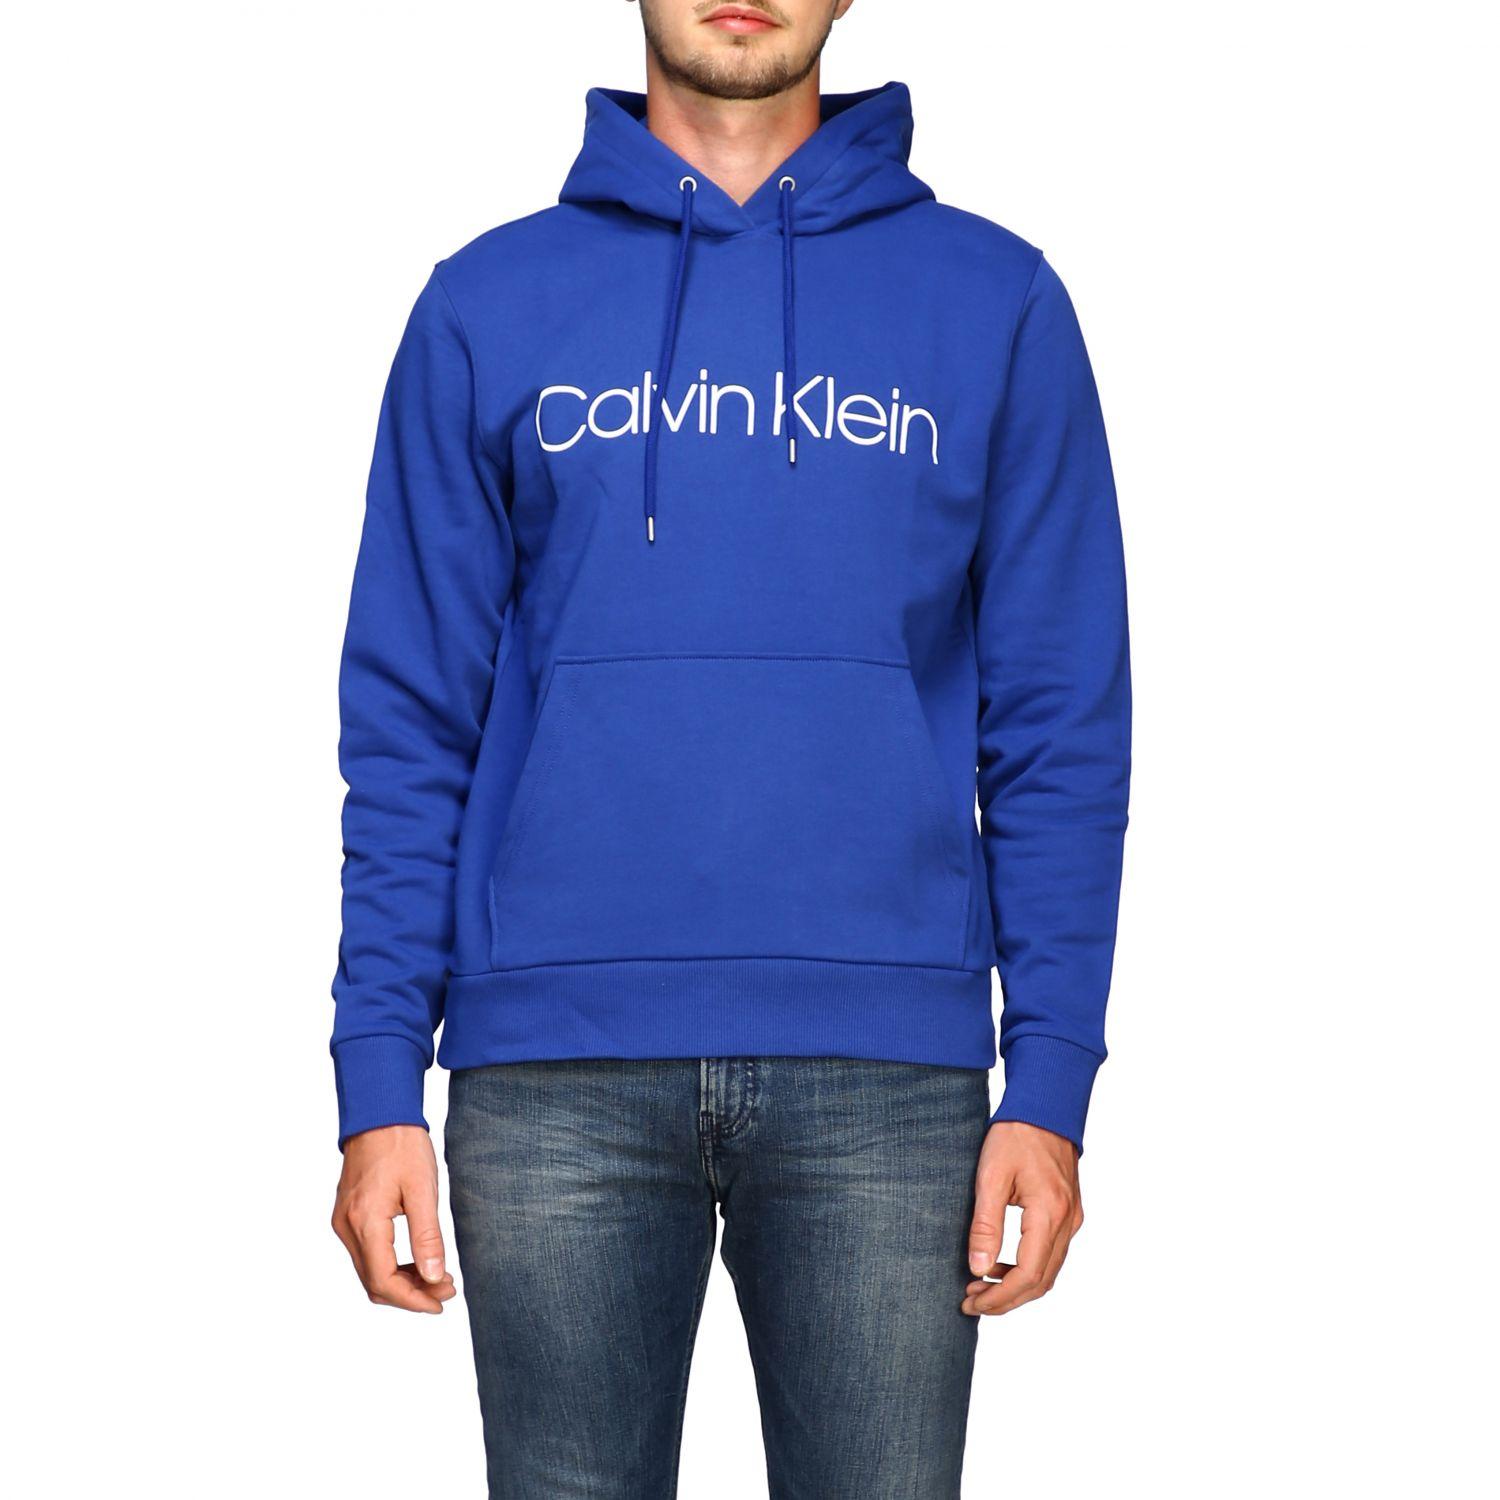 Calvin Klein Men's Sweater in Blue for Men - Lyst